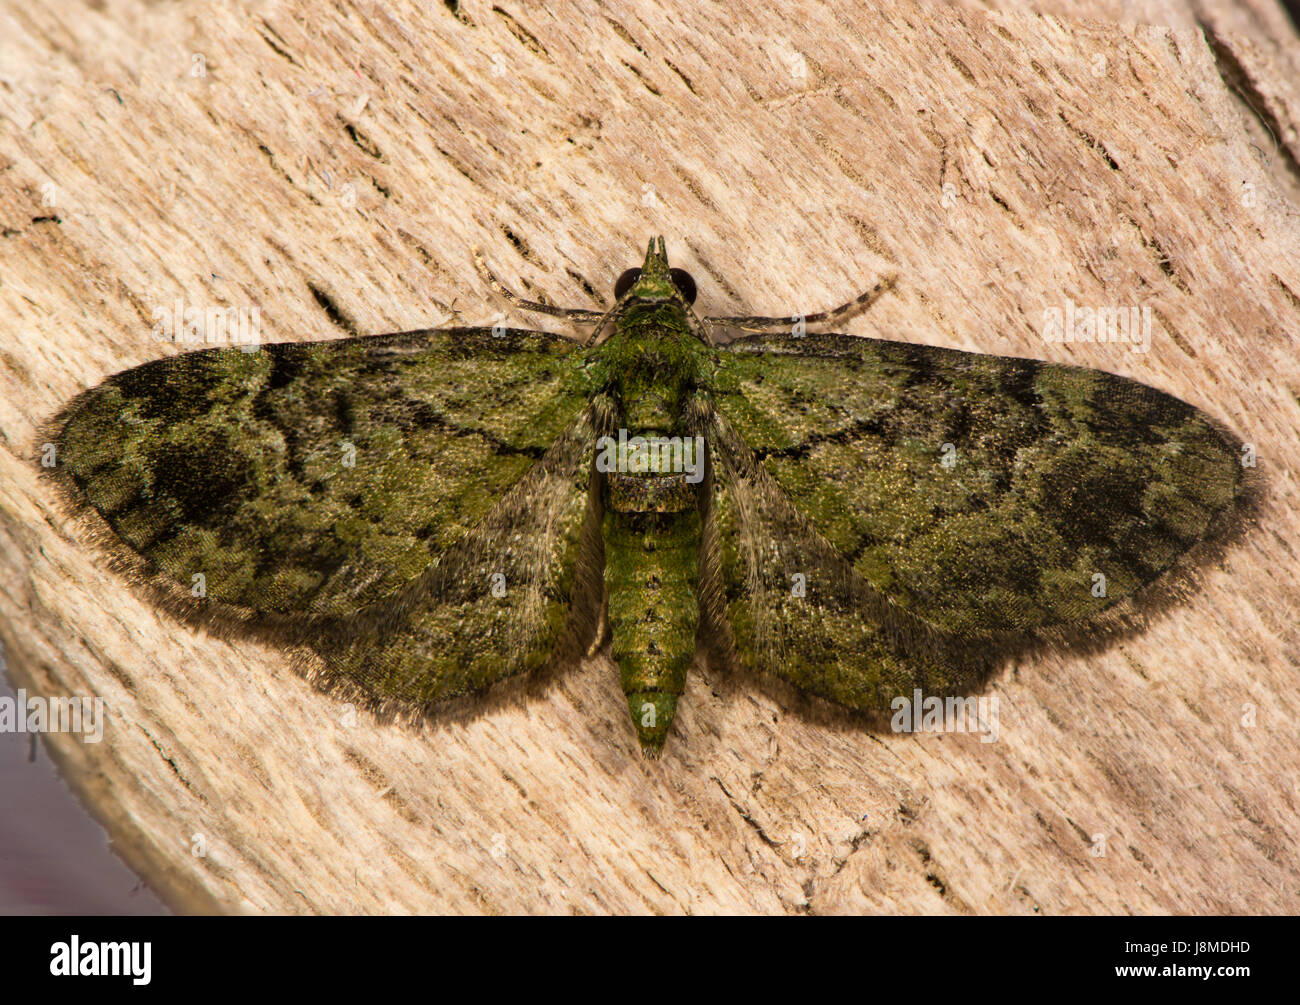 Grüne Mops (Pasiphila Rectangulata) Motte. Britische Insekt in der Familie Geometridae, Geometer Motten, in Ruhe auf Holz Stockfoto